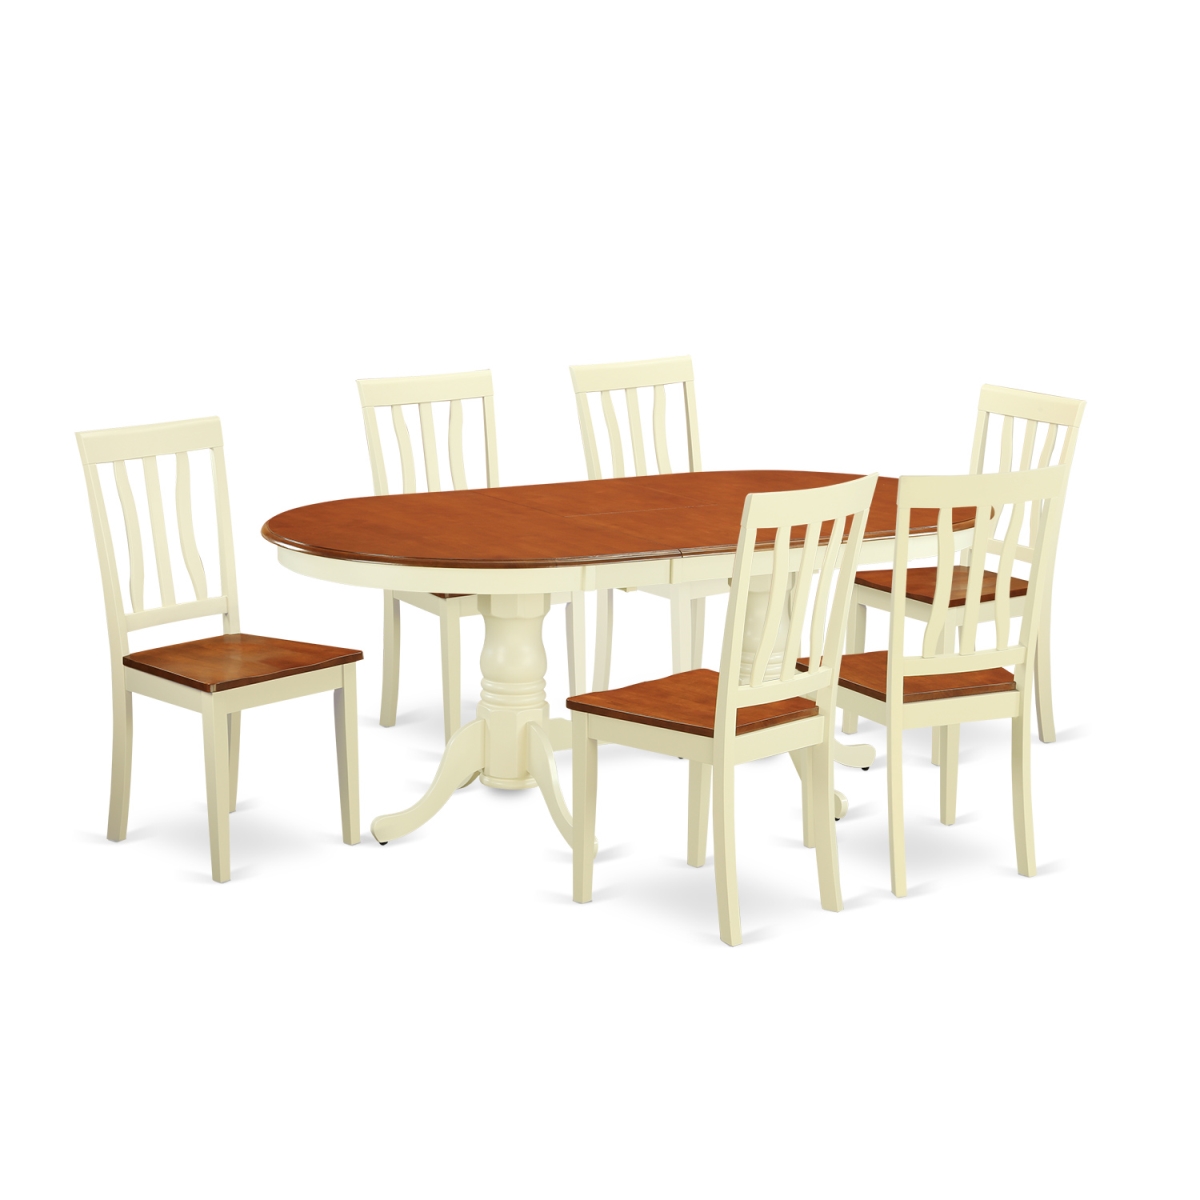 Kitchen Dinette Set - Small Kitchen Table & 6 Chairs, Buttermilk & Cherry - 7 Piece